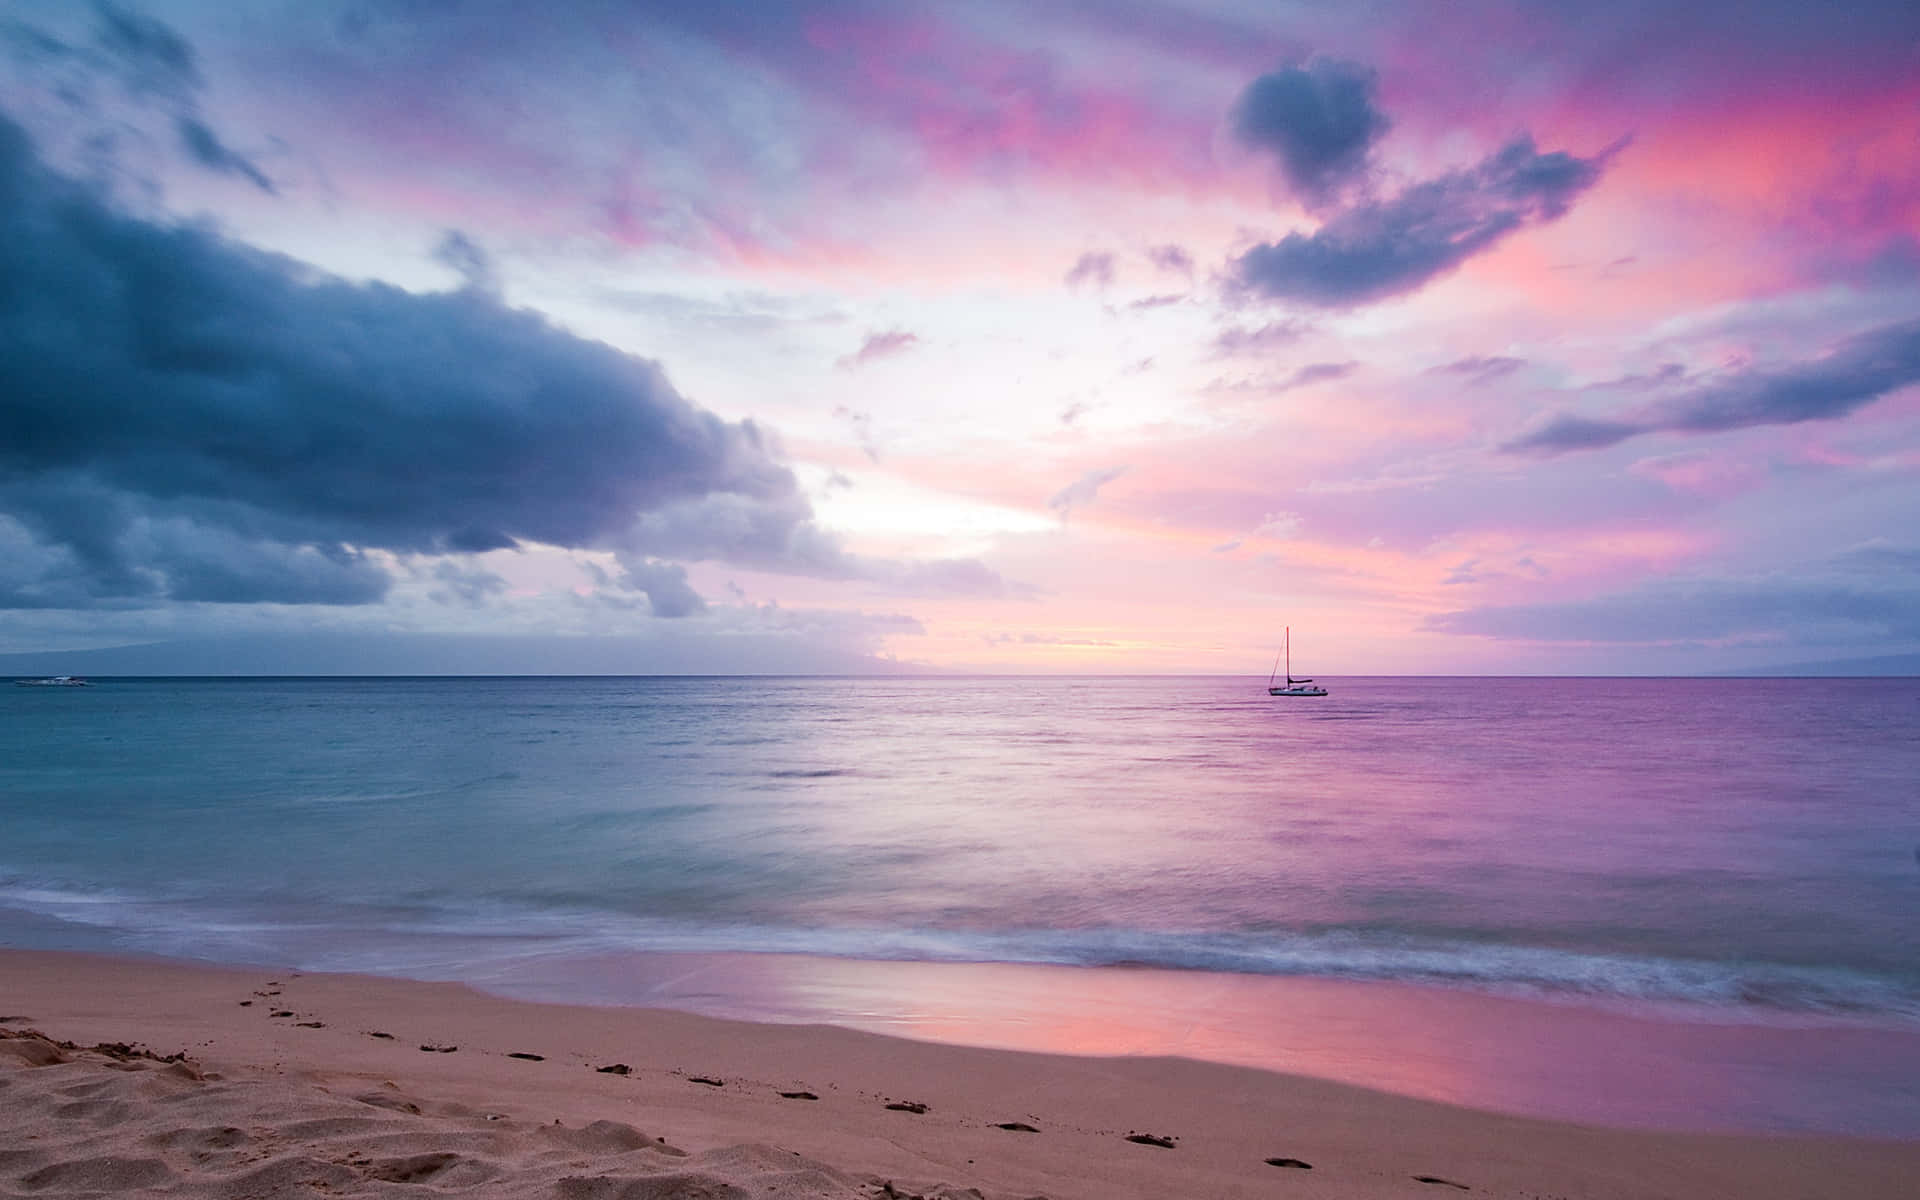 Nyd en smuk lyserød strand solnedgang. Wallpaper